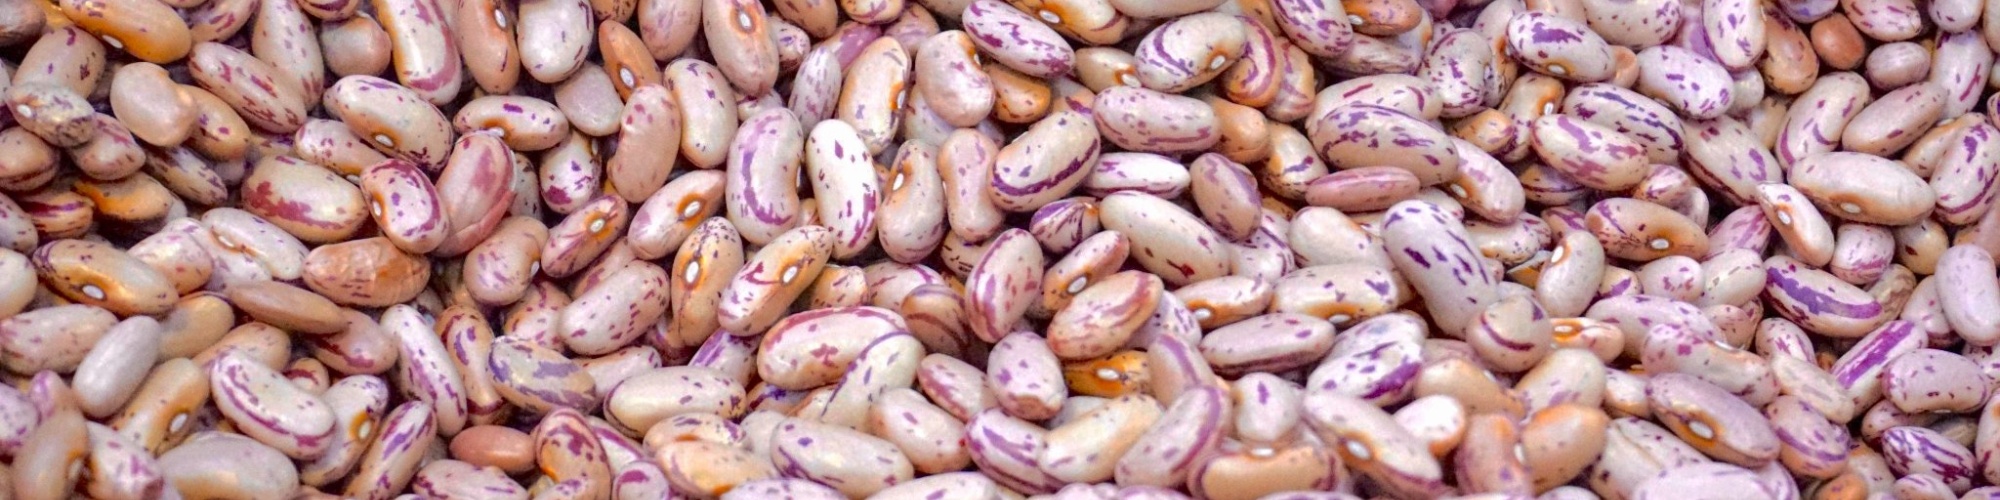 Image of beige and pink beans courtesy of Digital Buggu via Pexels